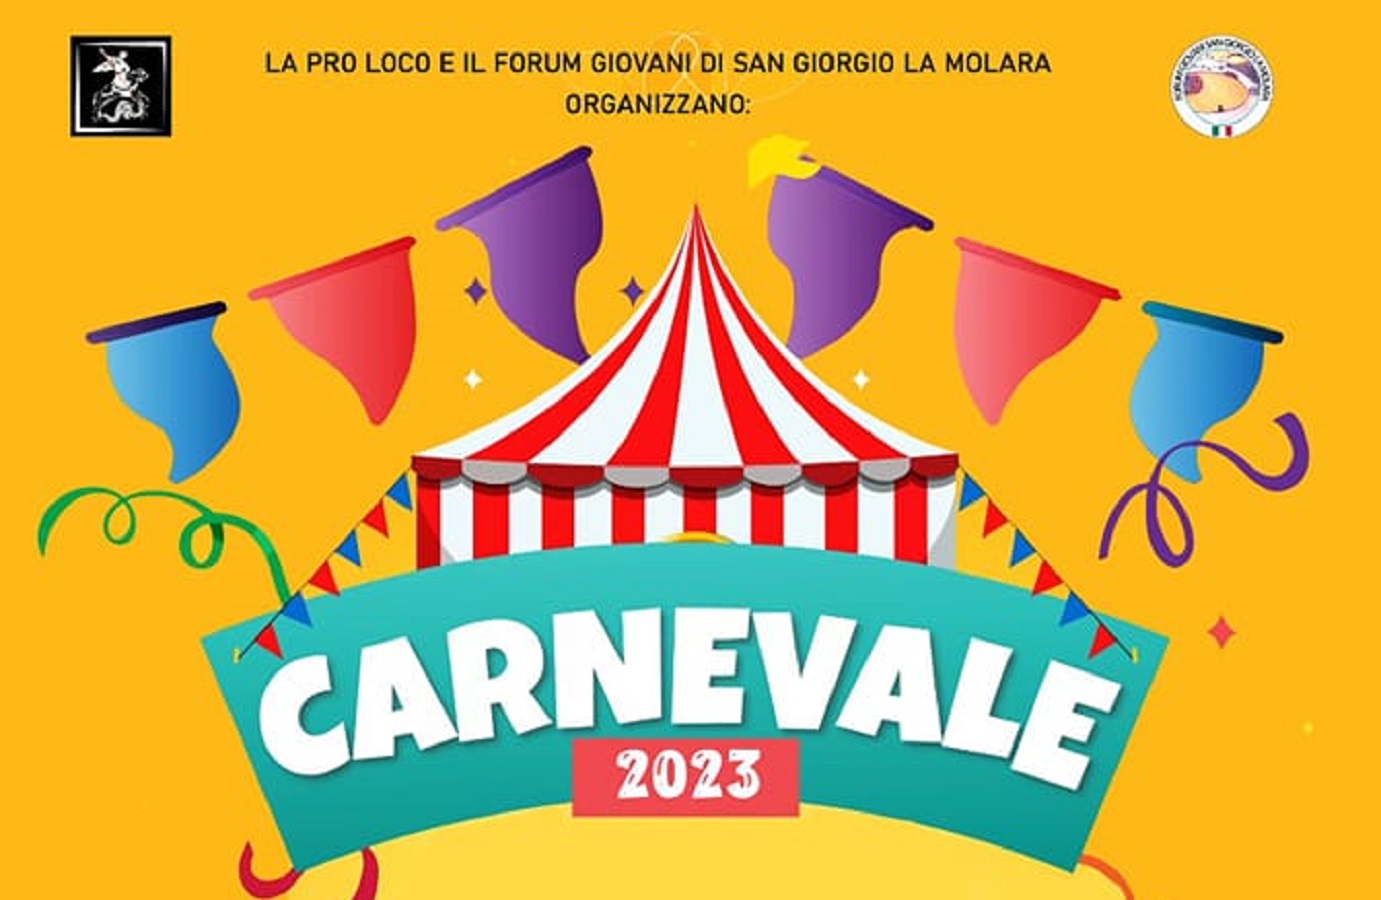 Carnevale 2023 a San Giorgio la Molara.jpg